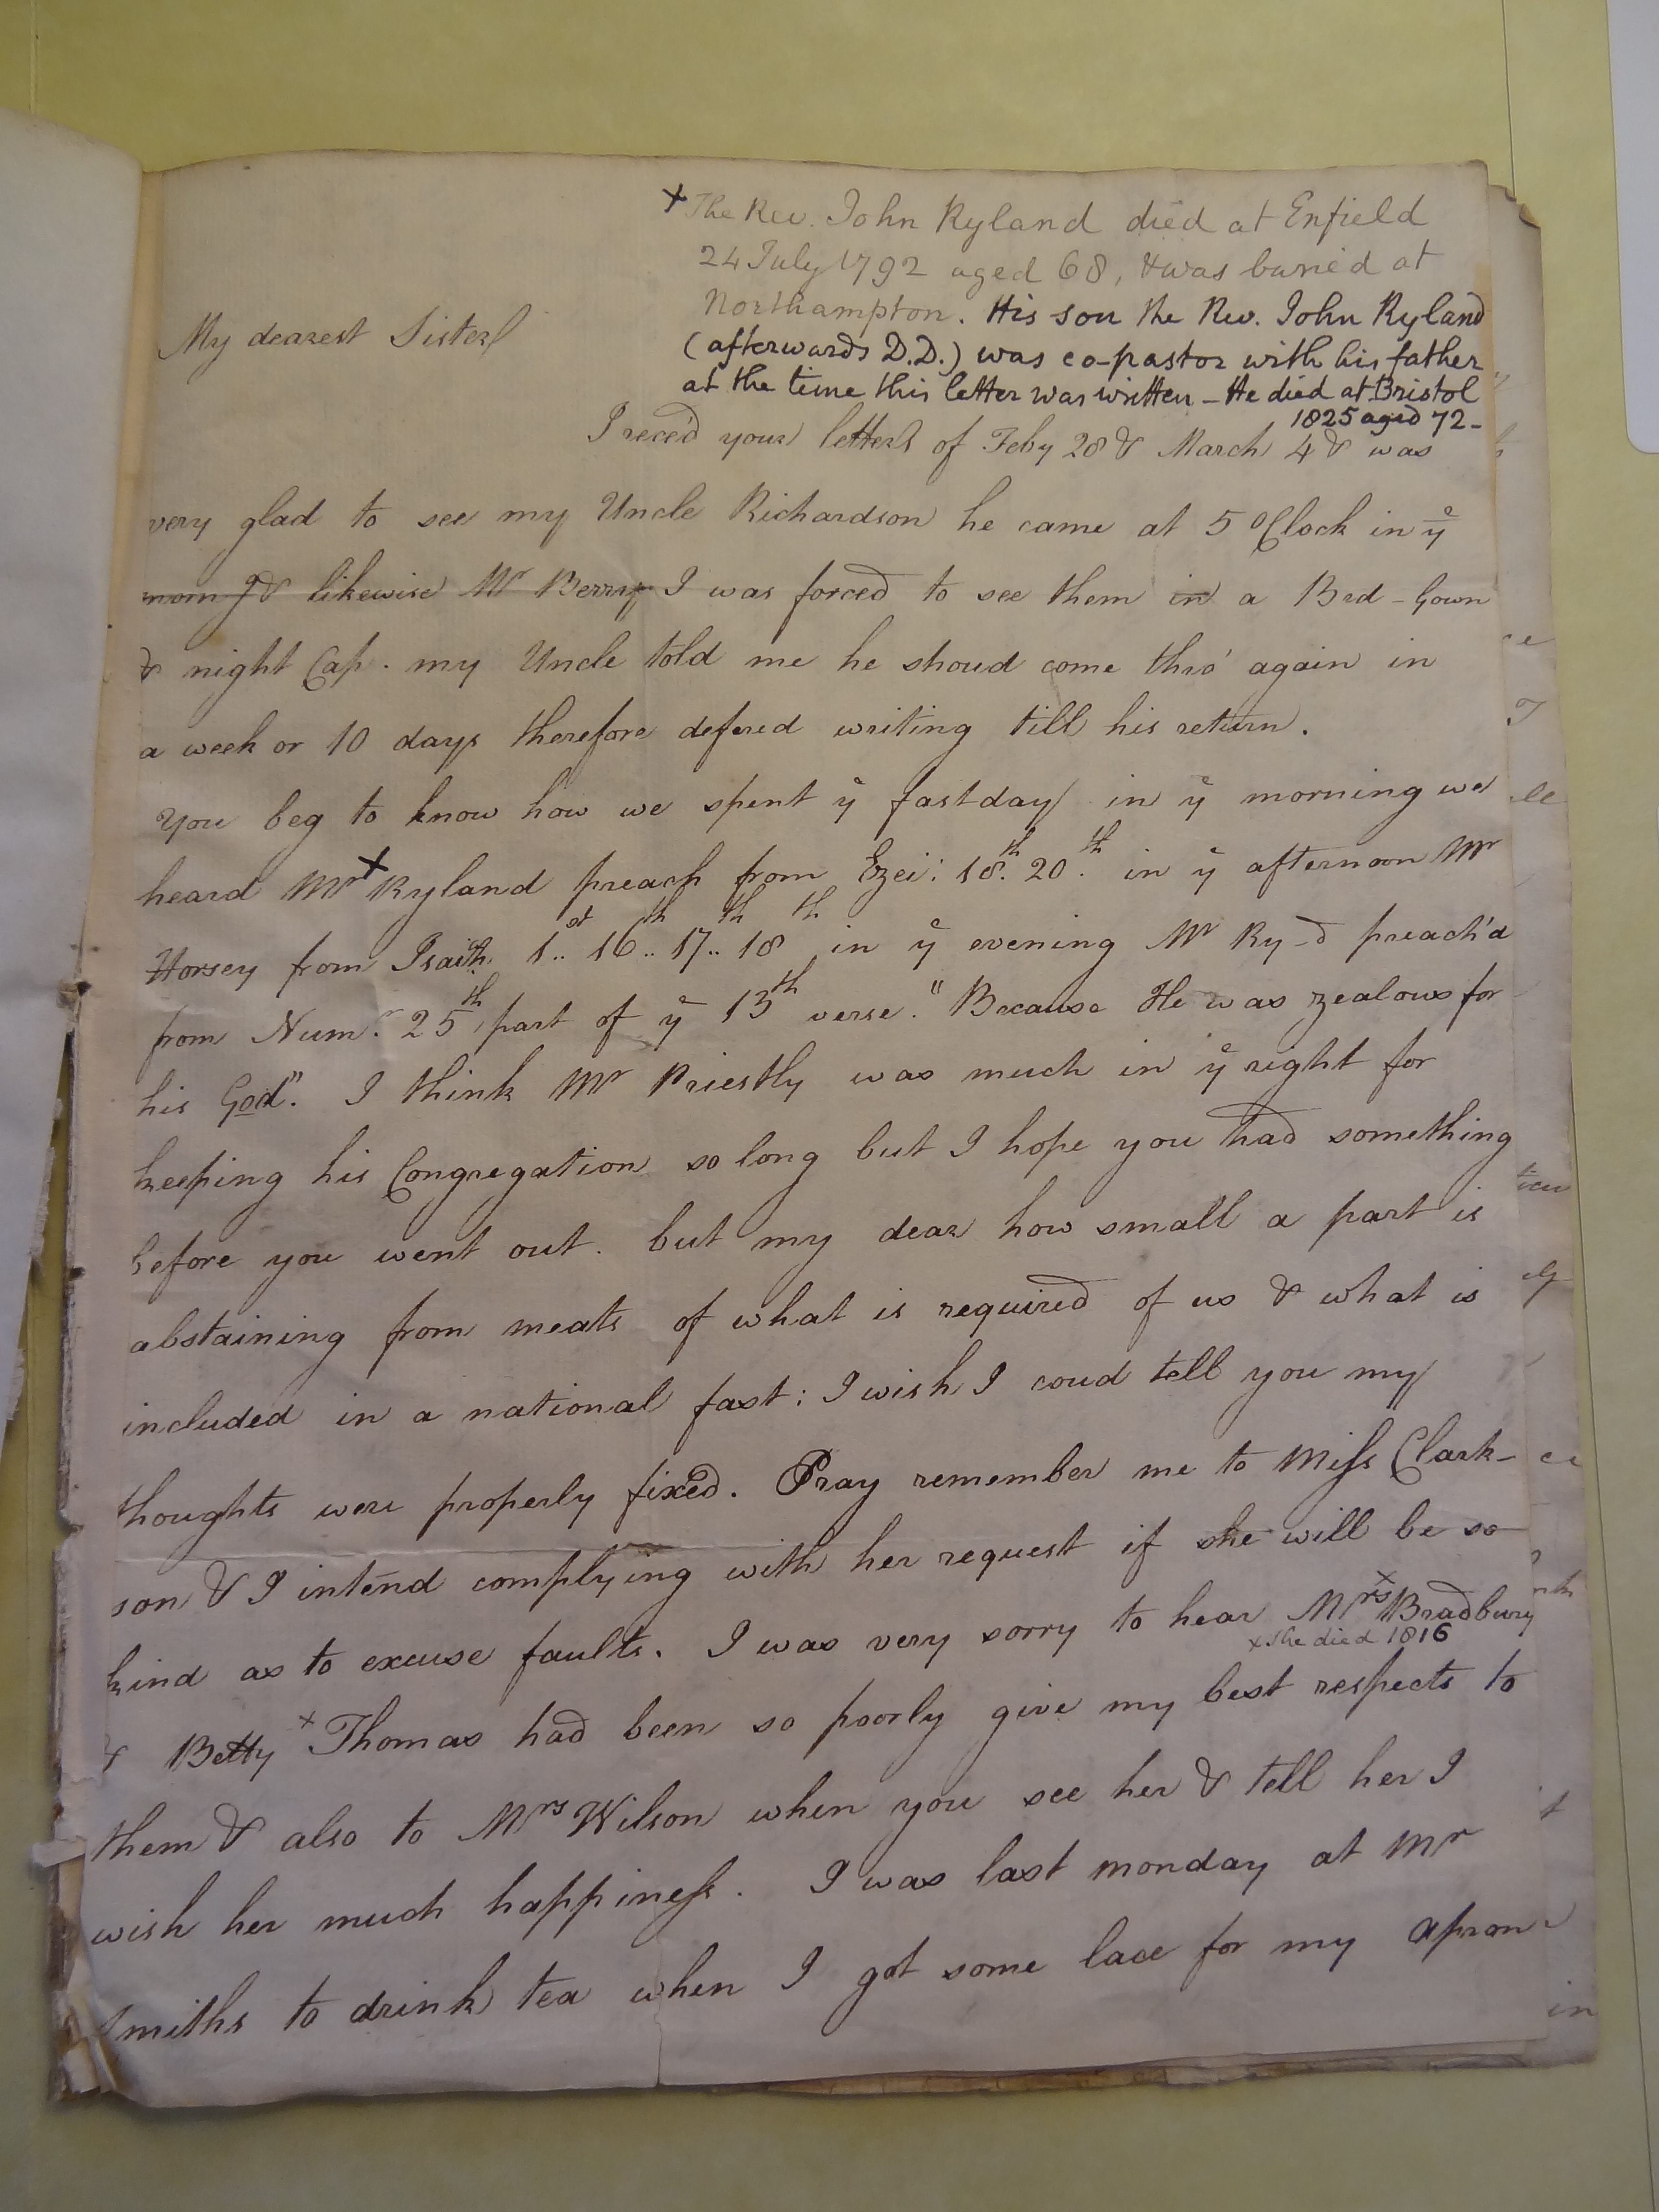 Image #1 of letter: Rebekah Bateman to Elizabeth Wilson, 1 March 1781